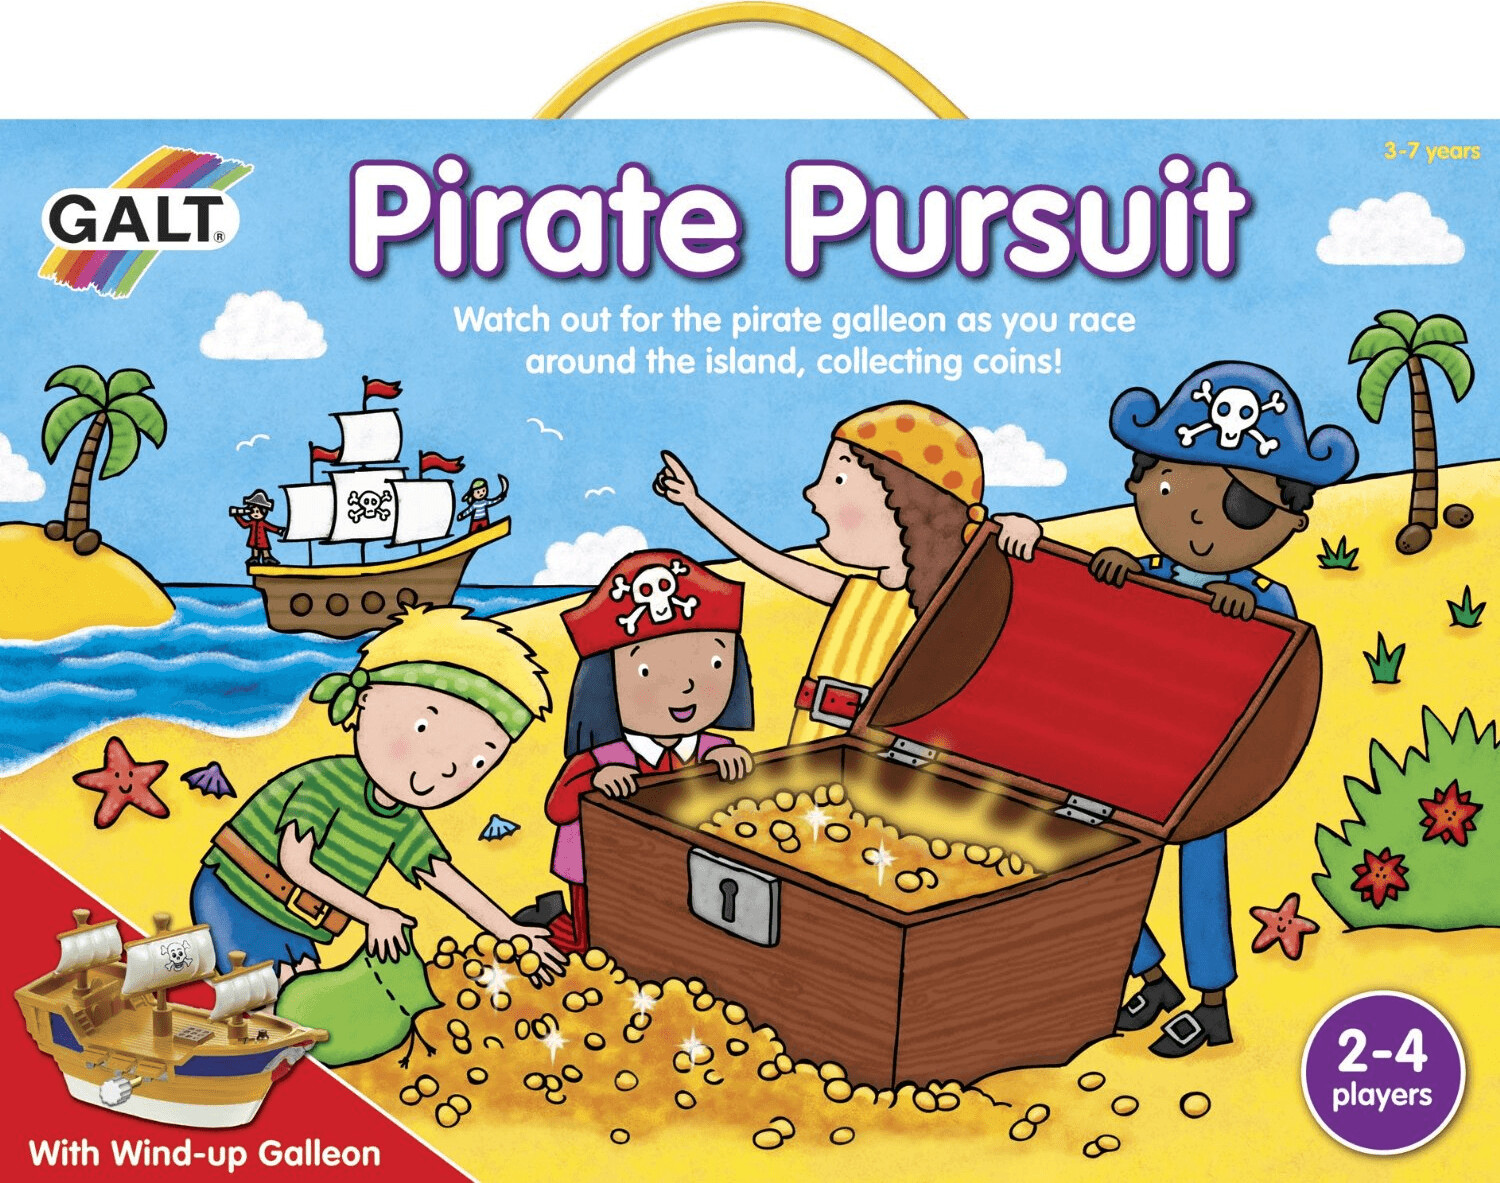 Pirate Pursuit